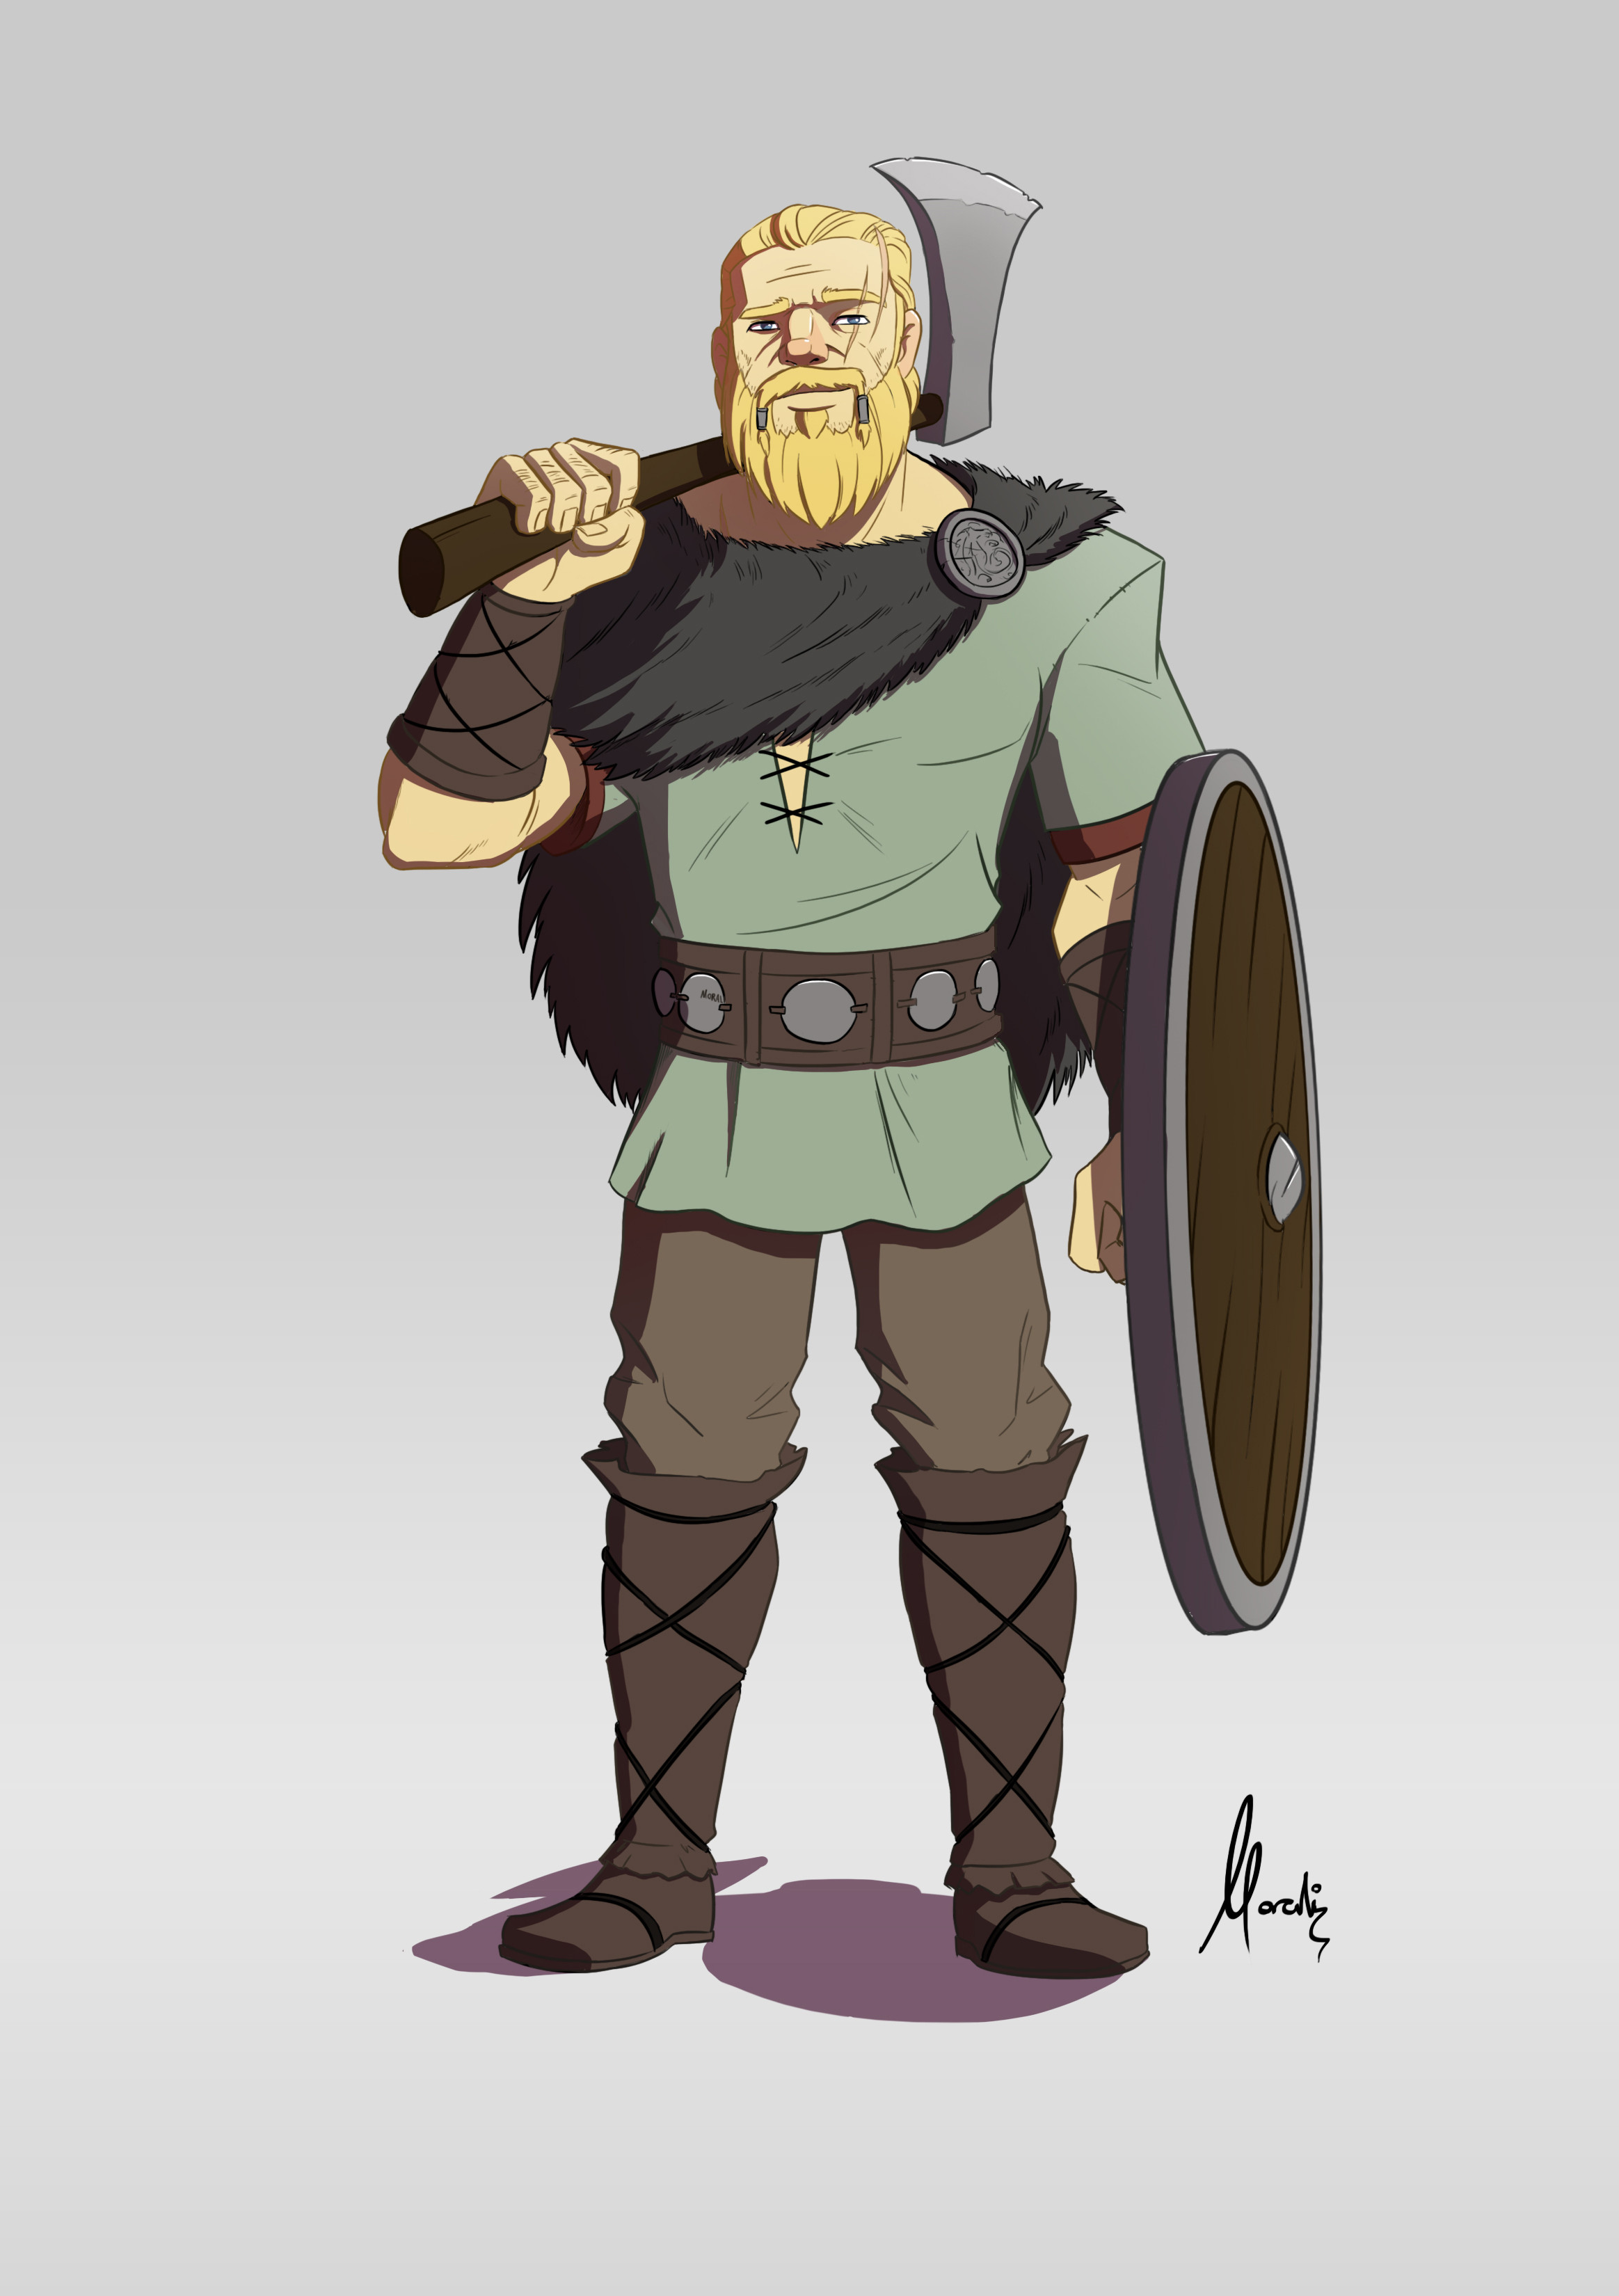 Inghard: the smartmouth warrior